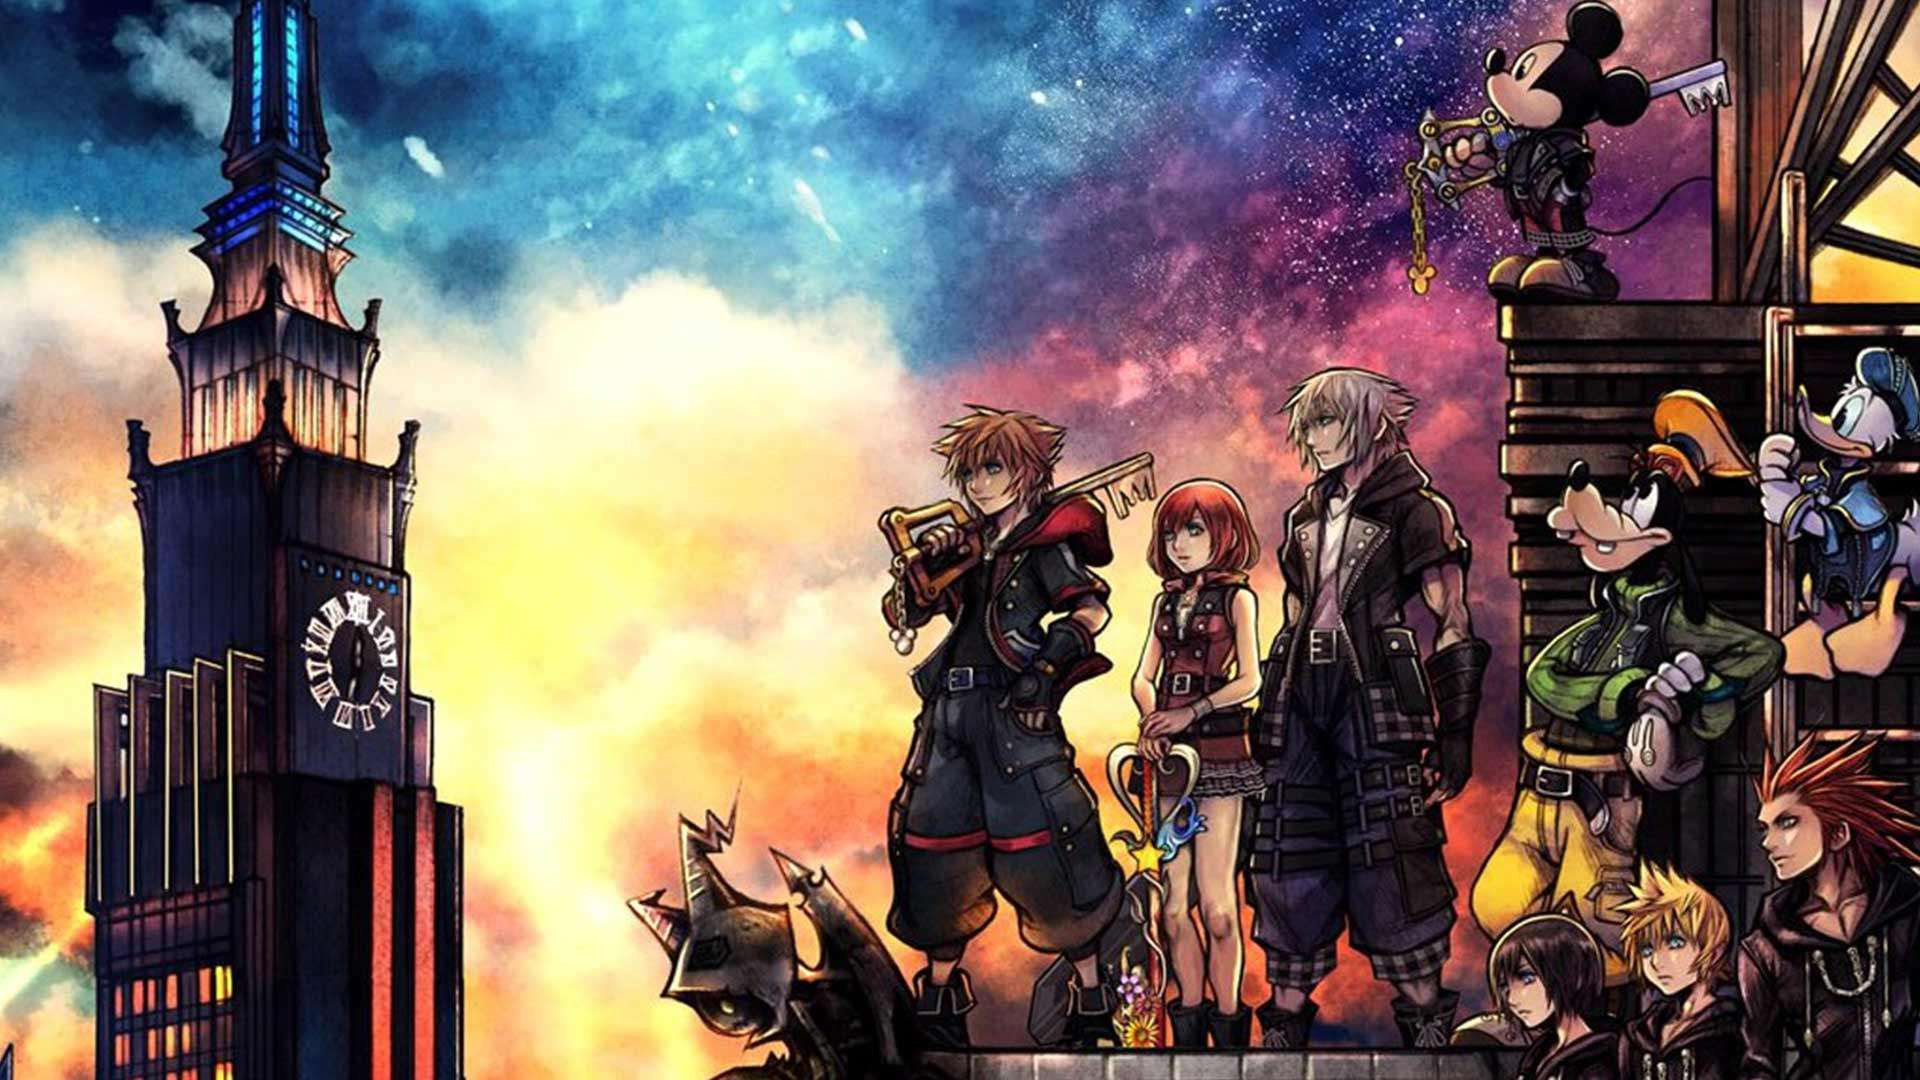 Kingdom Hearts III - Kingdom Hearts Wiki, the Kingdom Hearts encyclopedia - wide 9